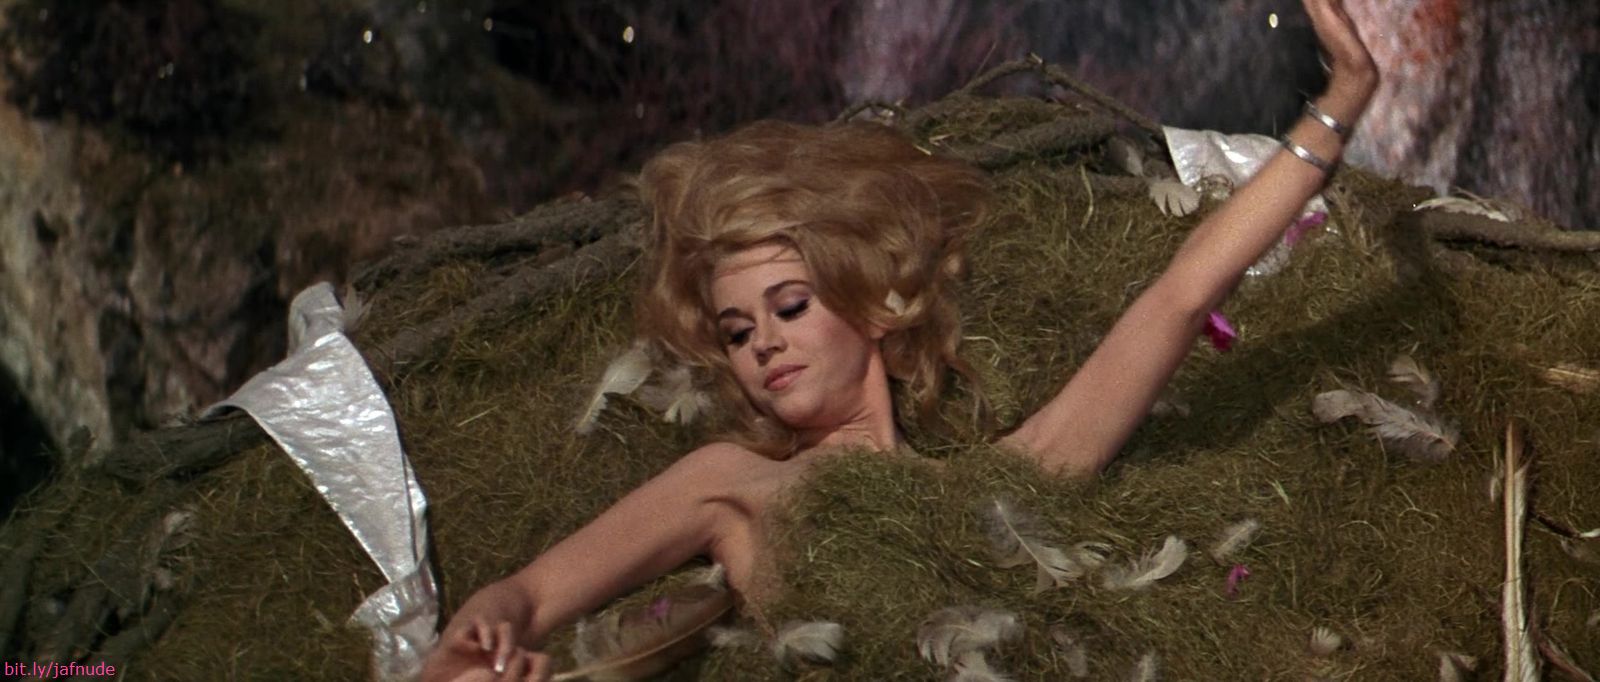 Jane Fonda Nude Sex Symbol And Fitness Queen 113 Pics